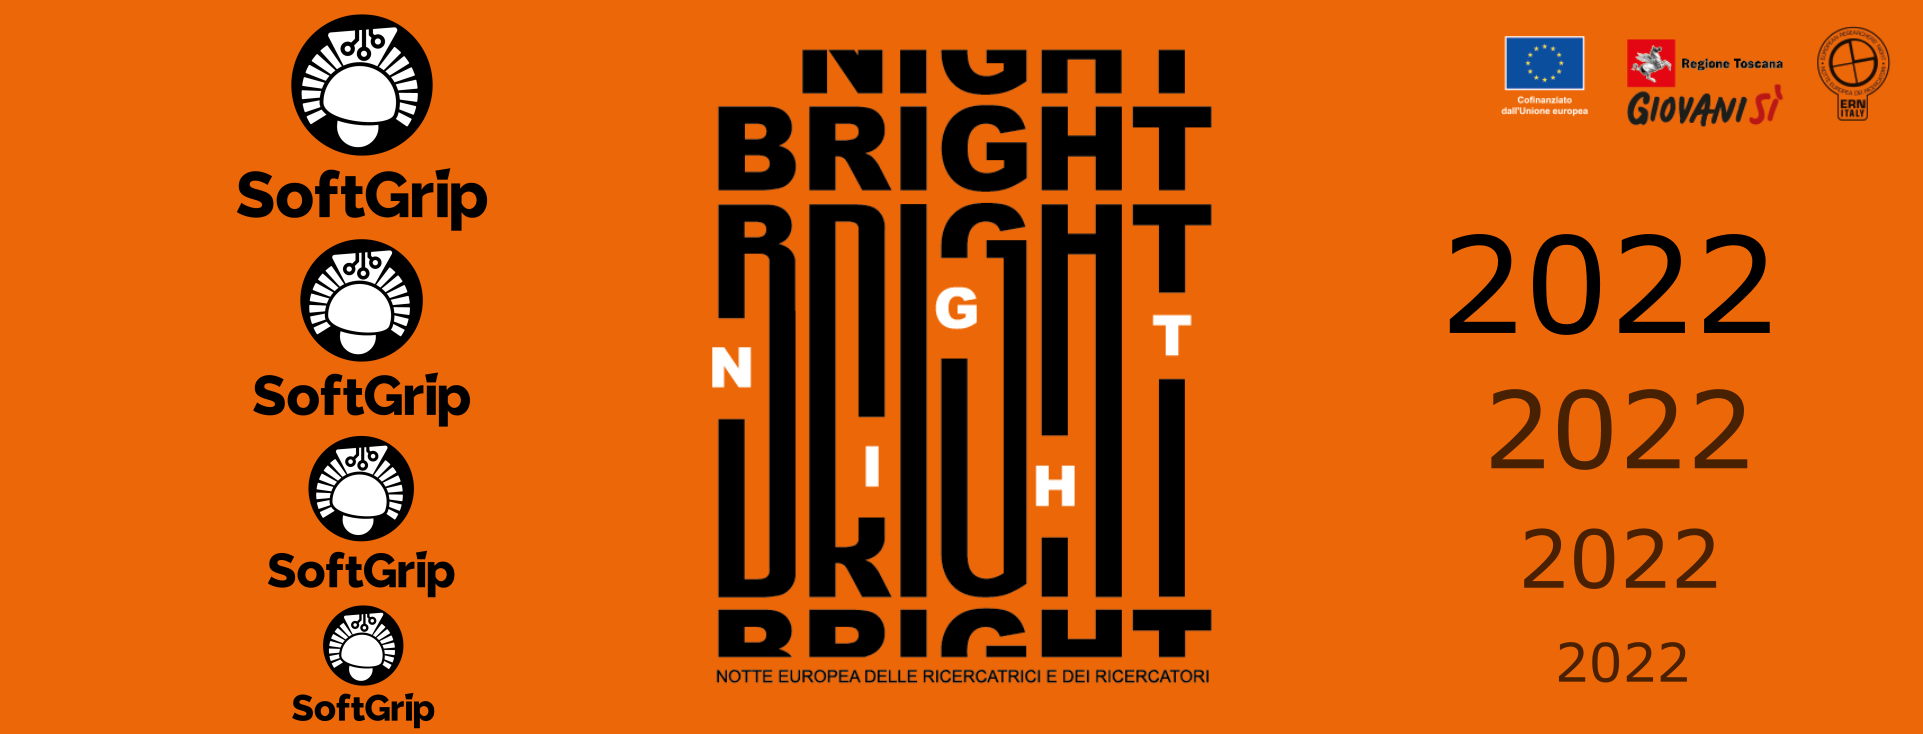 Bright Night Softgrip 2022